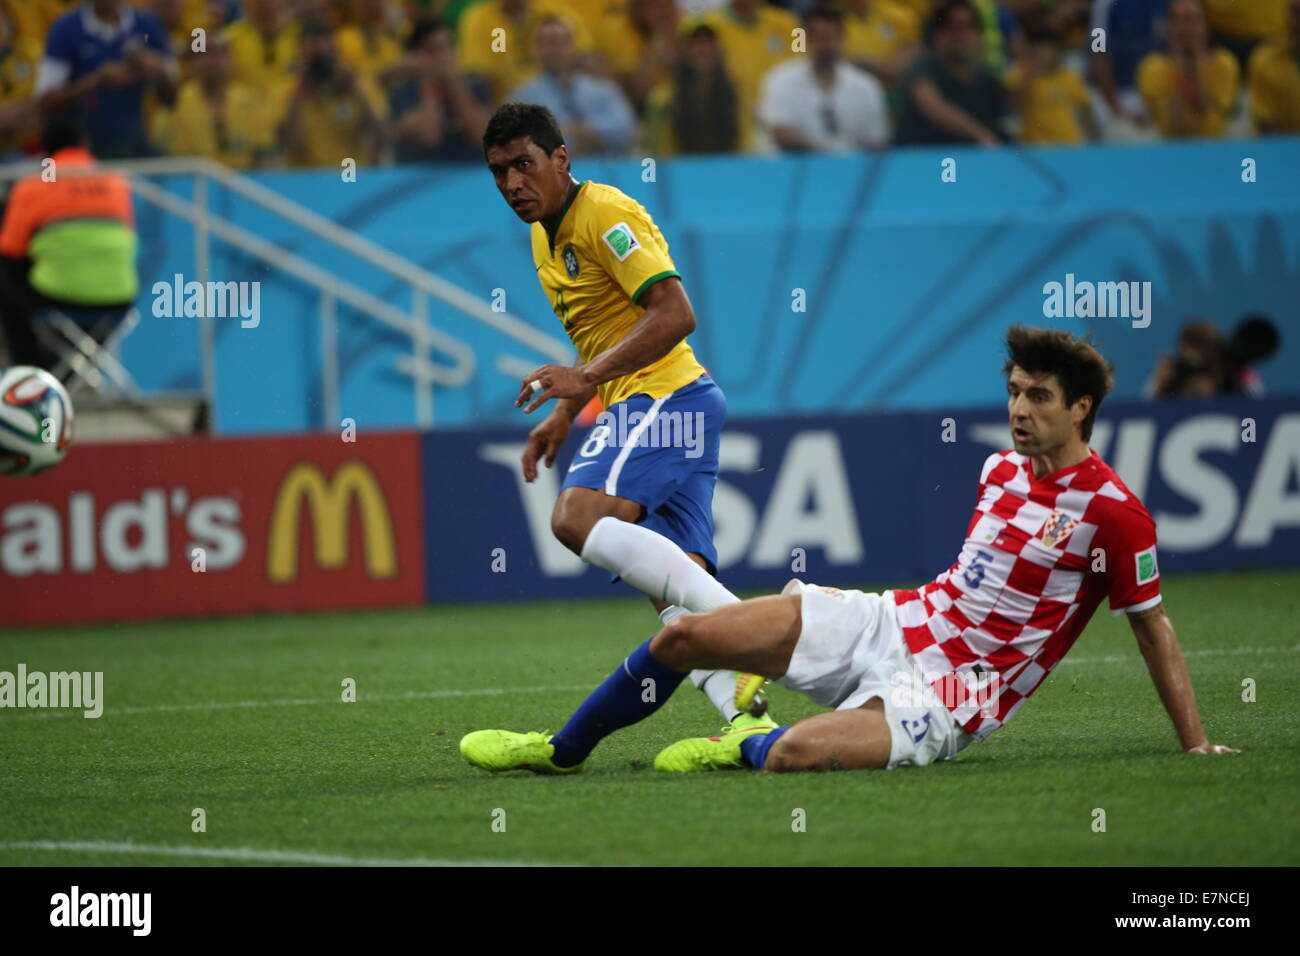 Vedran Corluka. Brazil v Croatia group match FIFA World Cup 2014 Brazil. Arena de Sao Paulo, Sao Paulo. 12 june 2014. Stock Photo